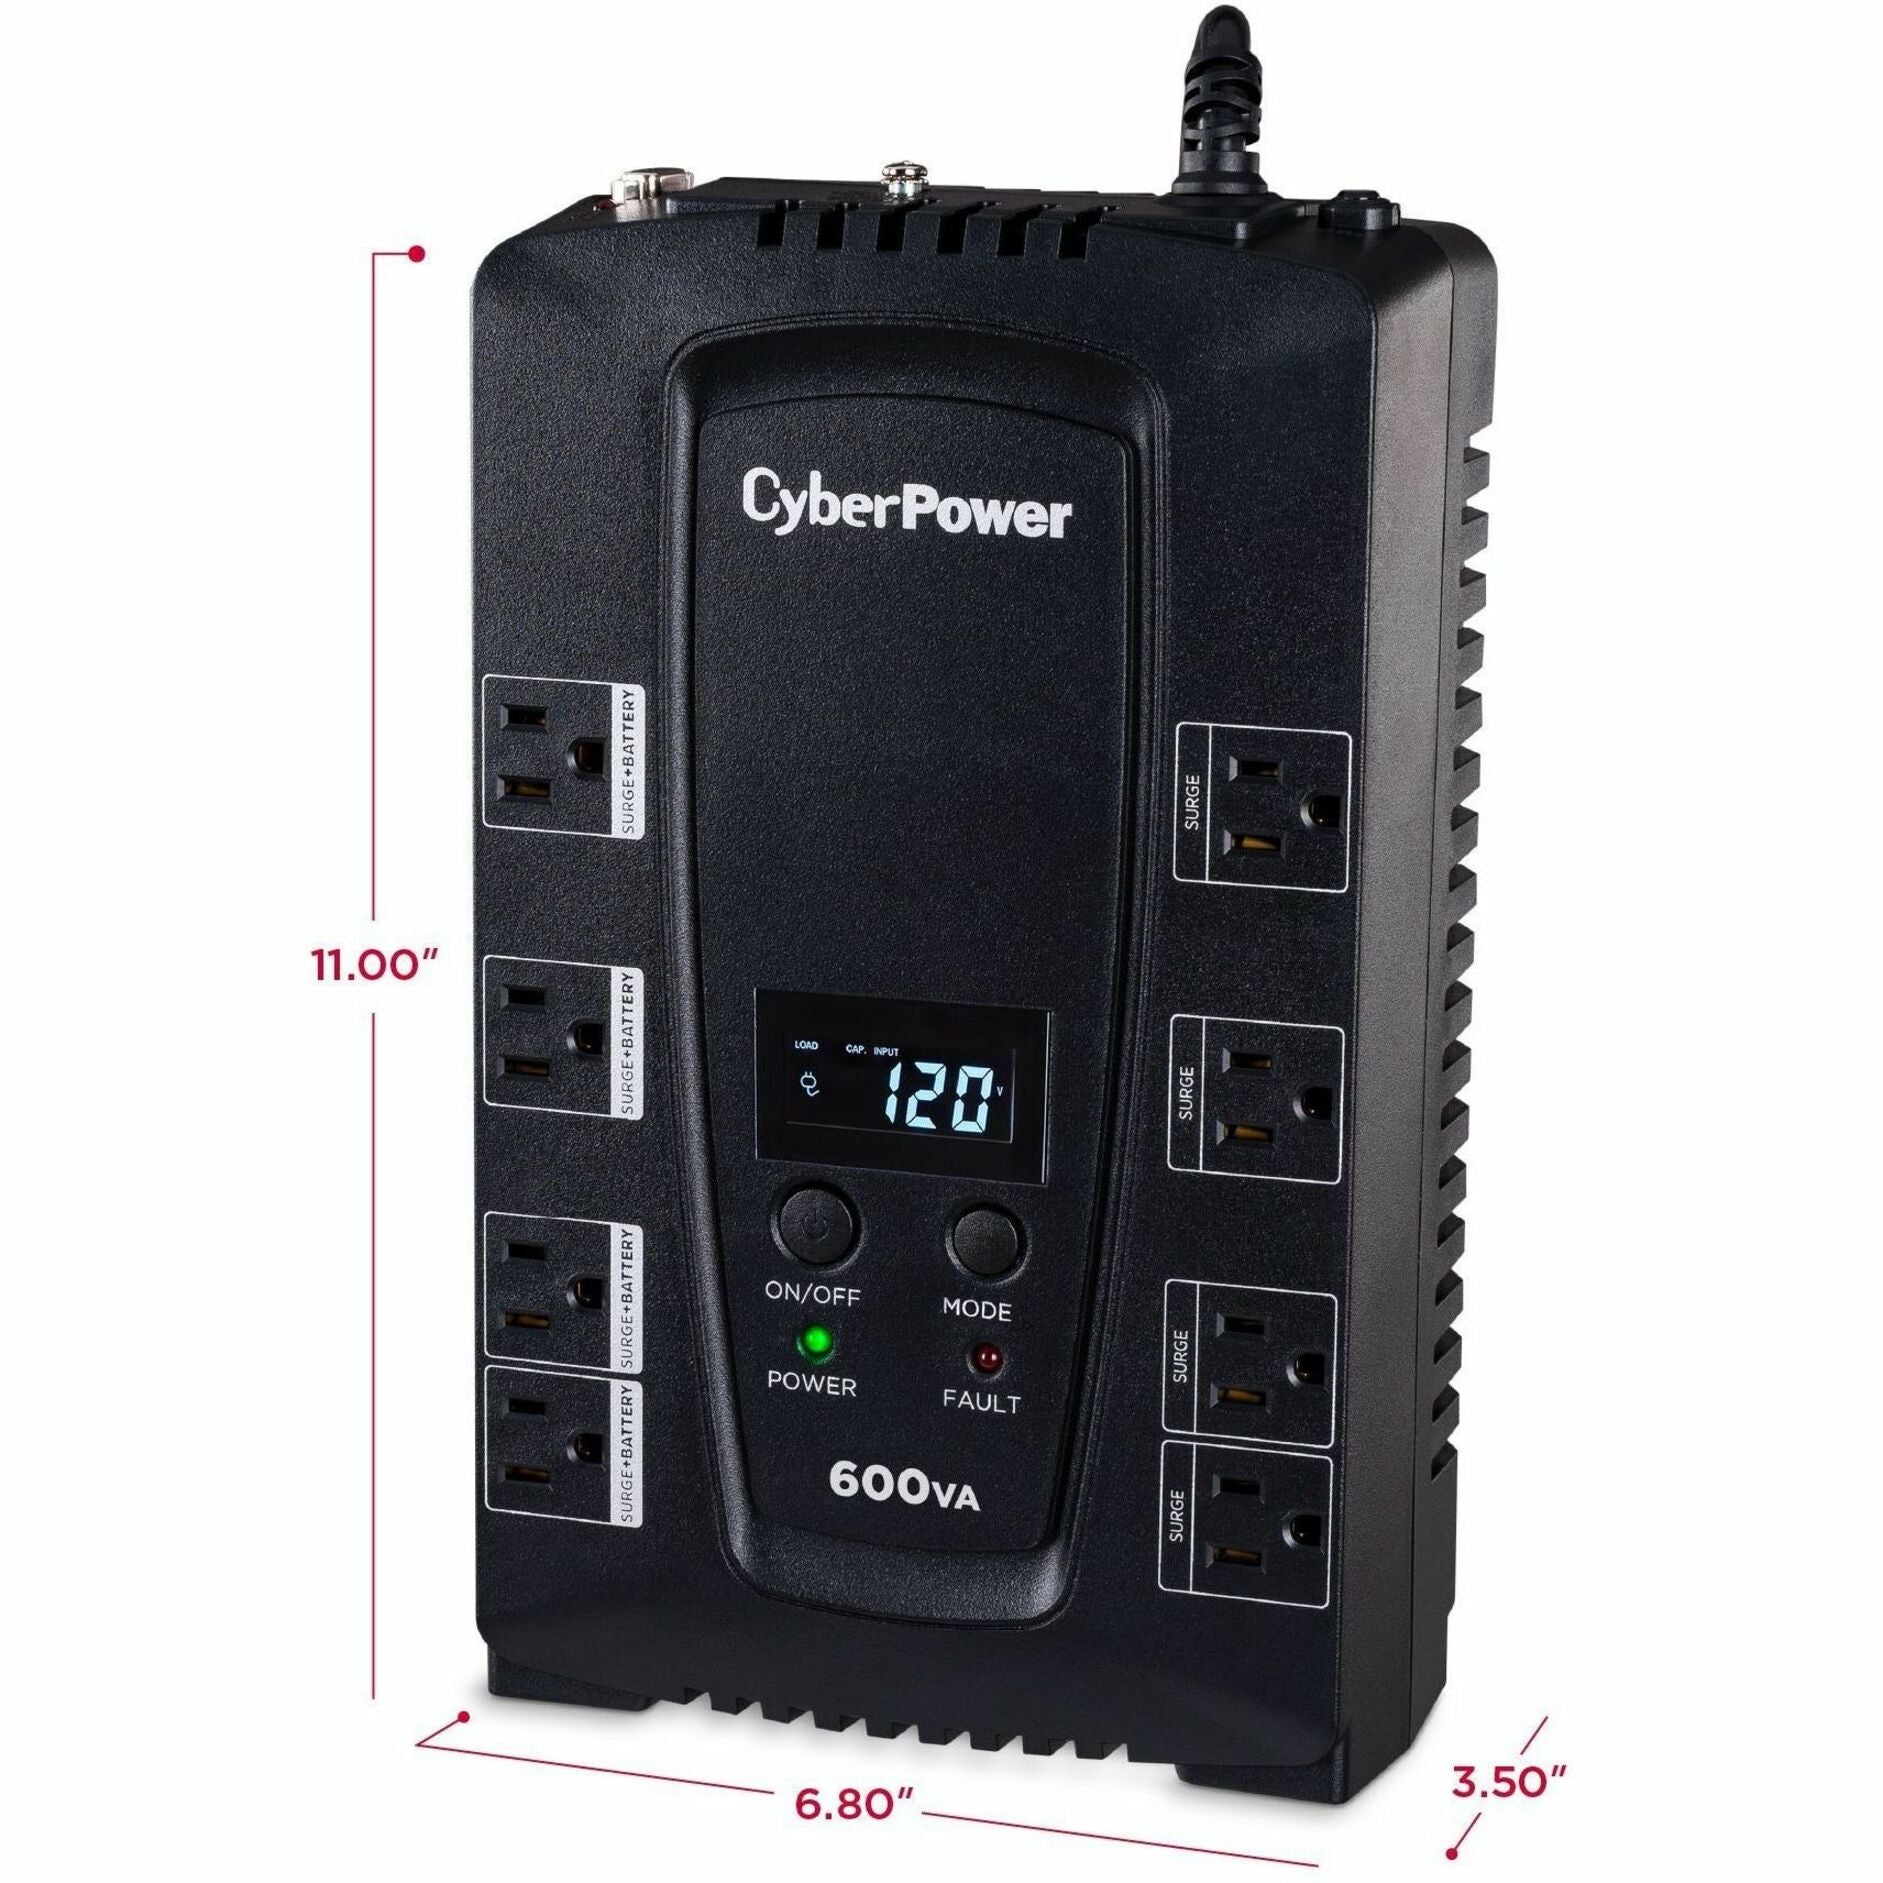 CyberPower Intelligent LCD 600 VA Desktop UPS [Discontinued]